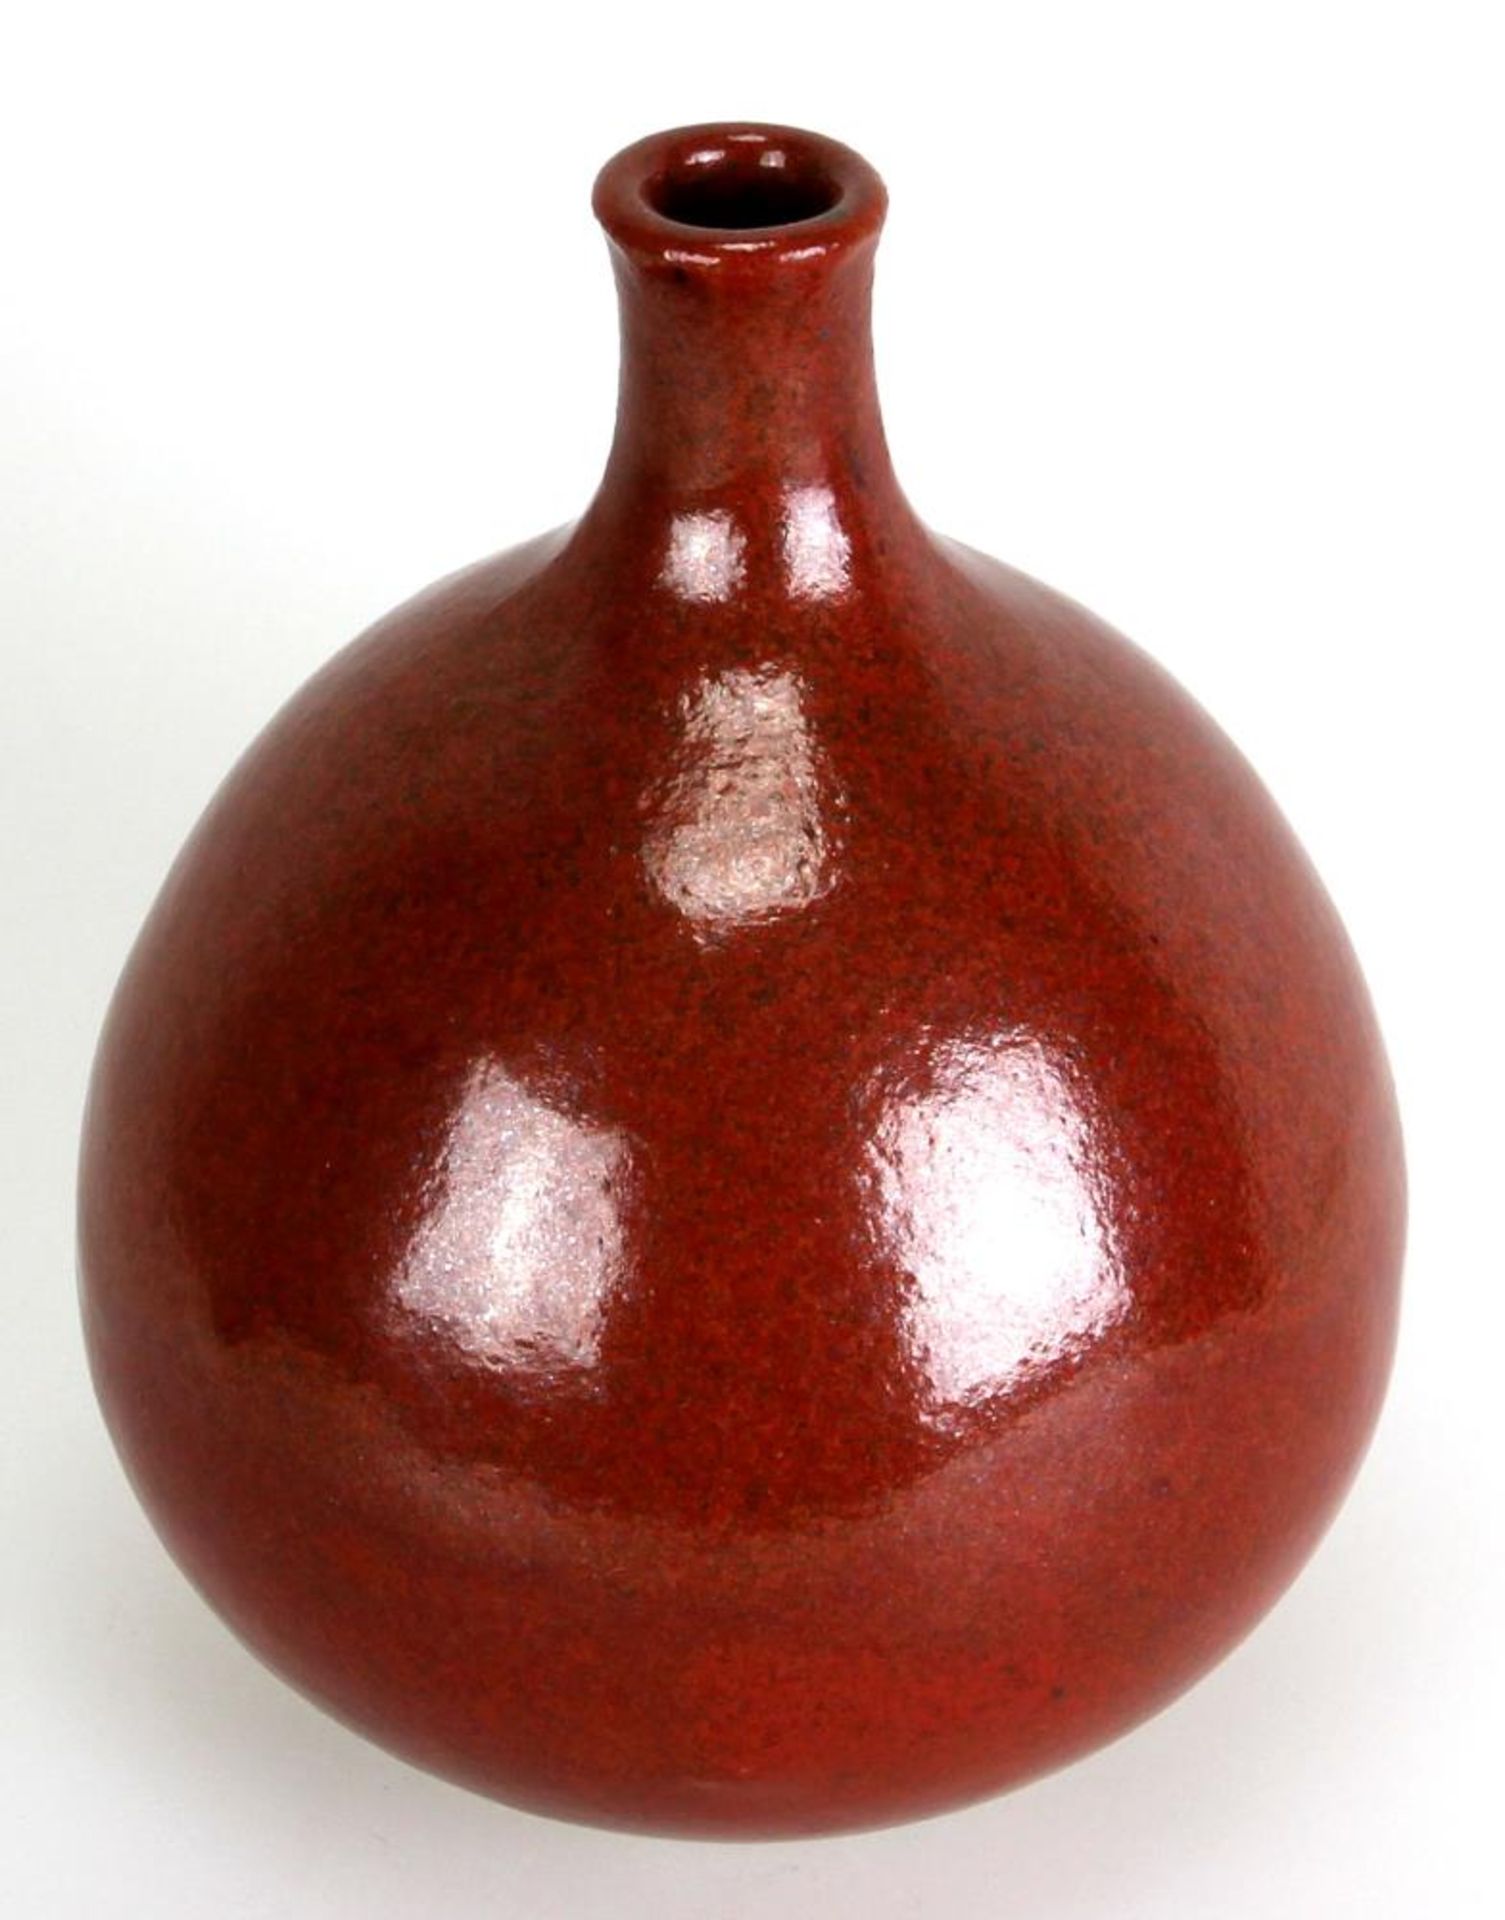 Horst Kerstan 1941 Frankfurt – 2005 Kandern. Vase in Apfelform. Heller Scherben mit rötlich/ - Bild 2 aus 3